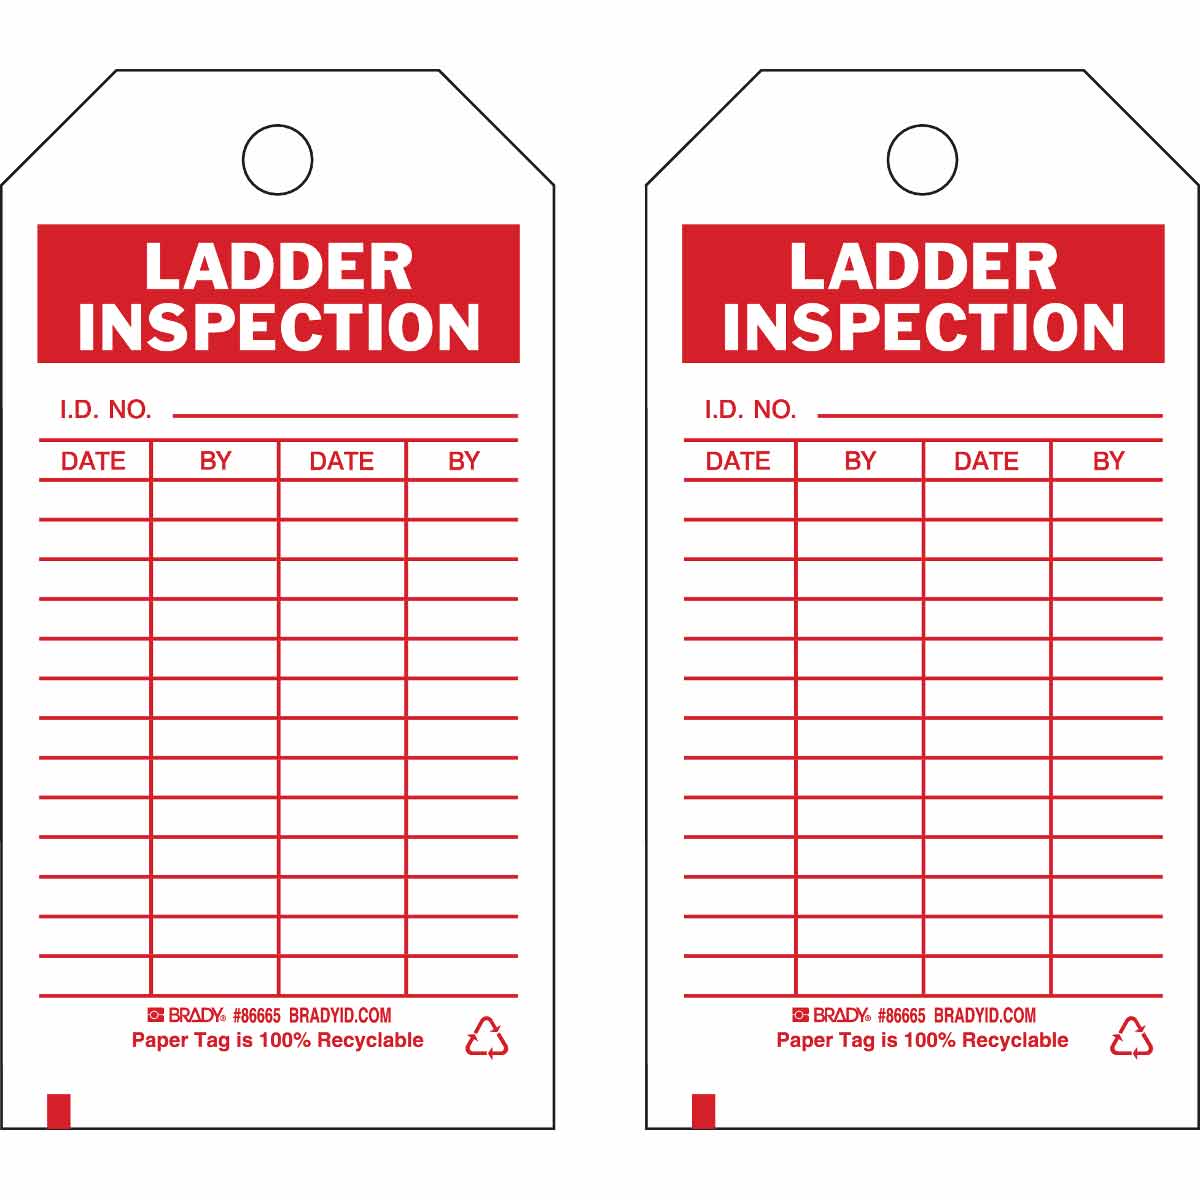 Brady Part: 86665 | Ladder Inspection Tags | BradyID.com